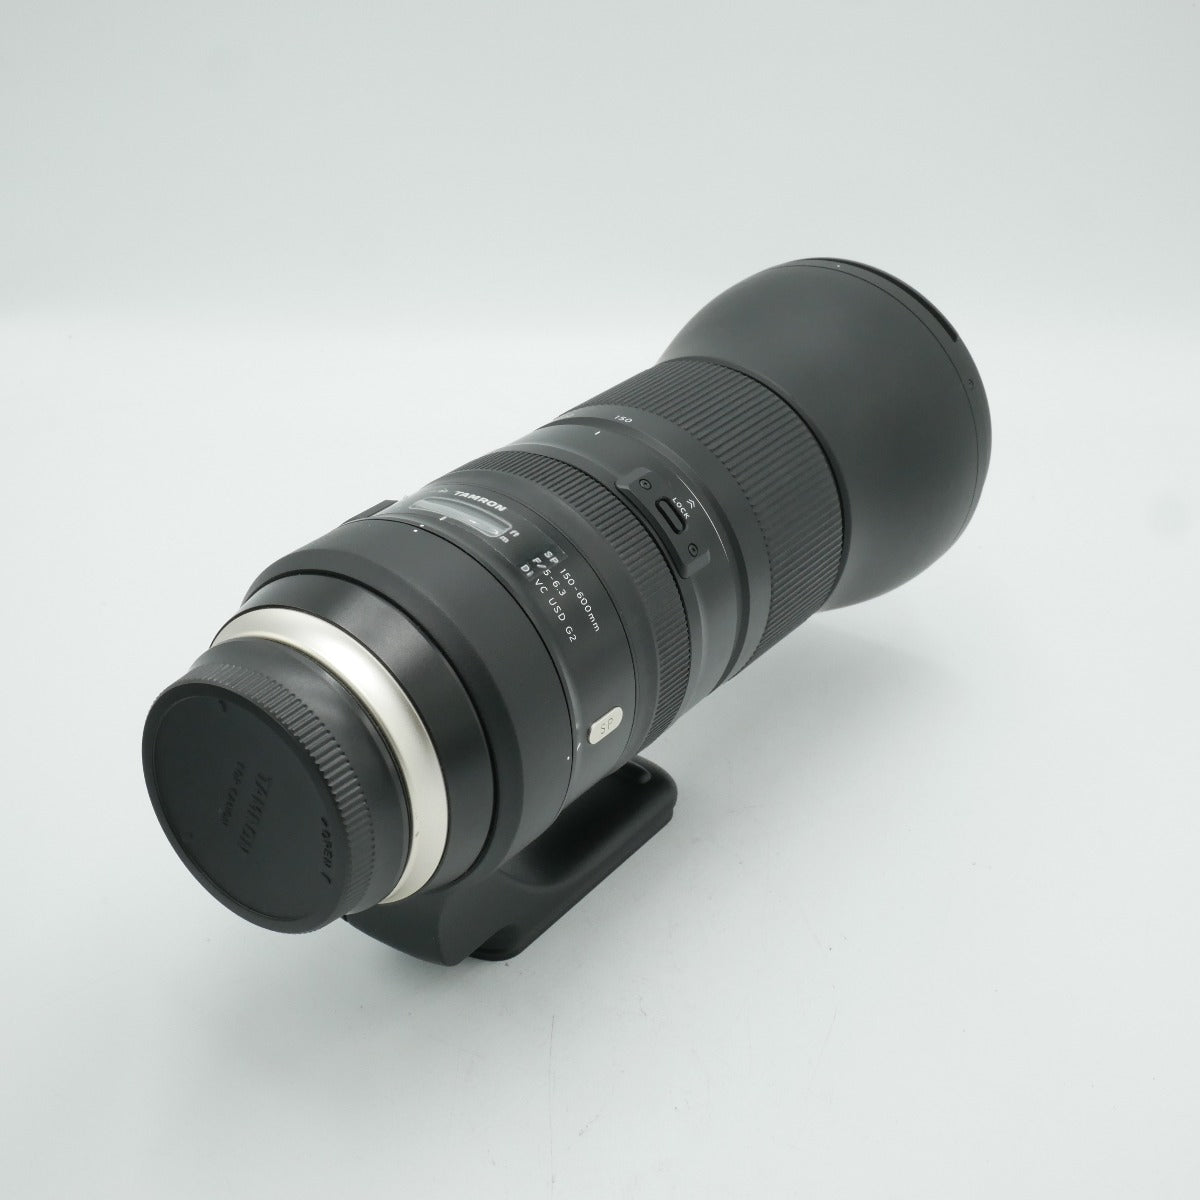 Tamron SP 150-600mm f/5-6.3 Di VC USD G2 - EF mount